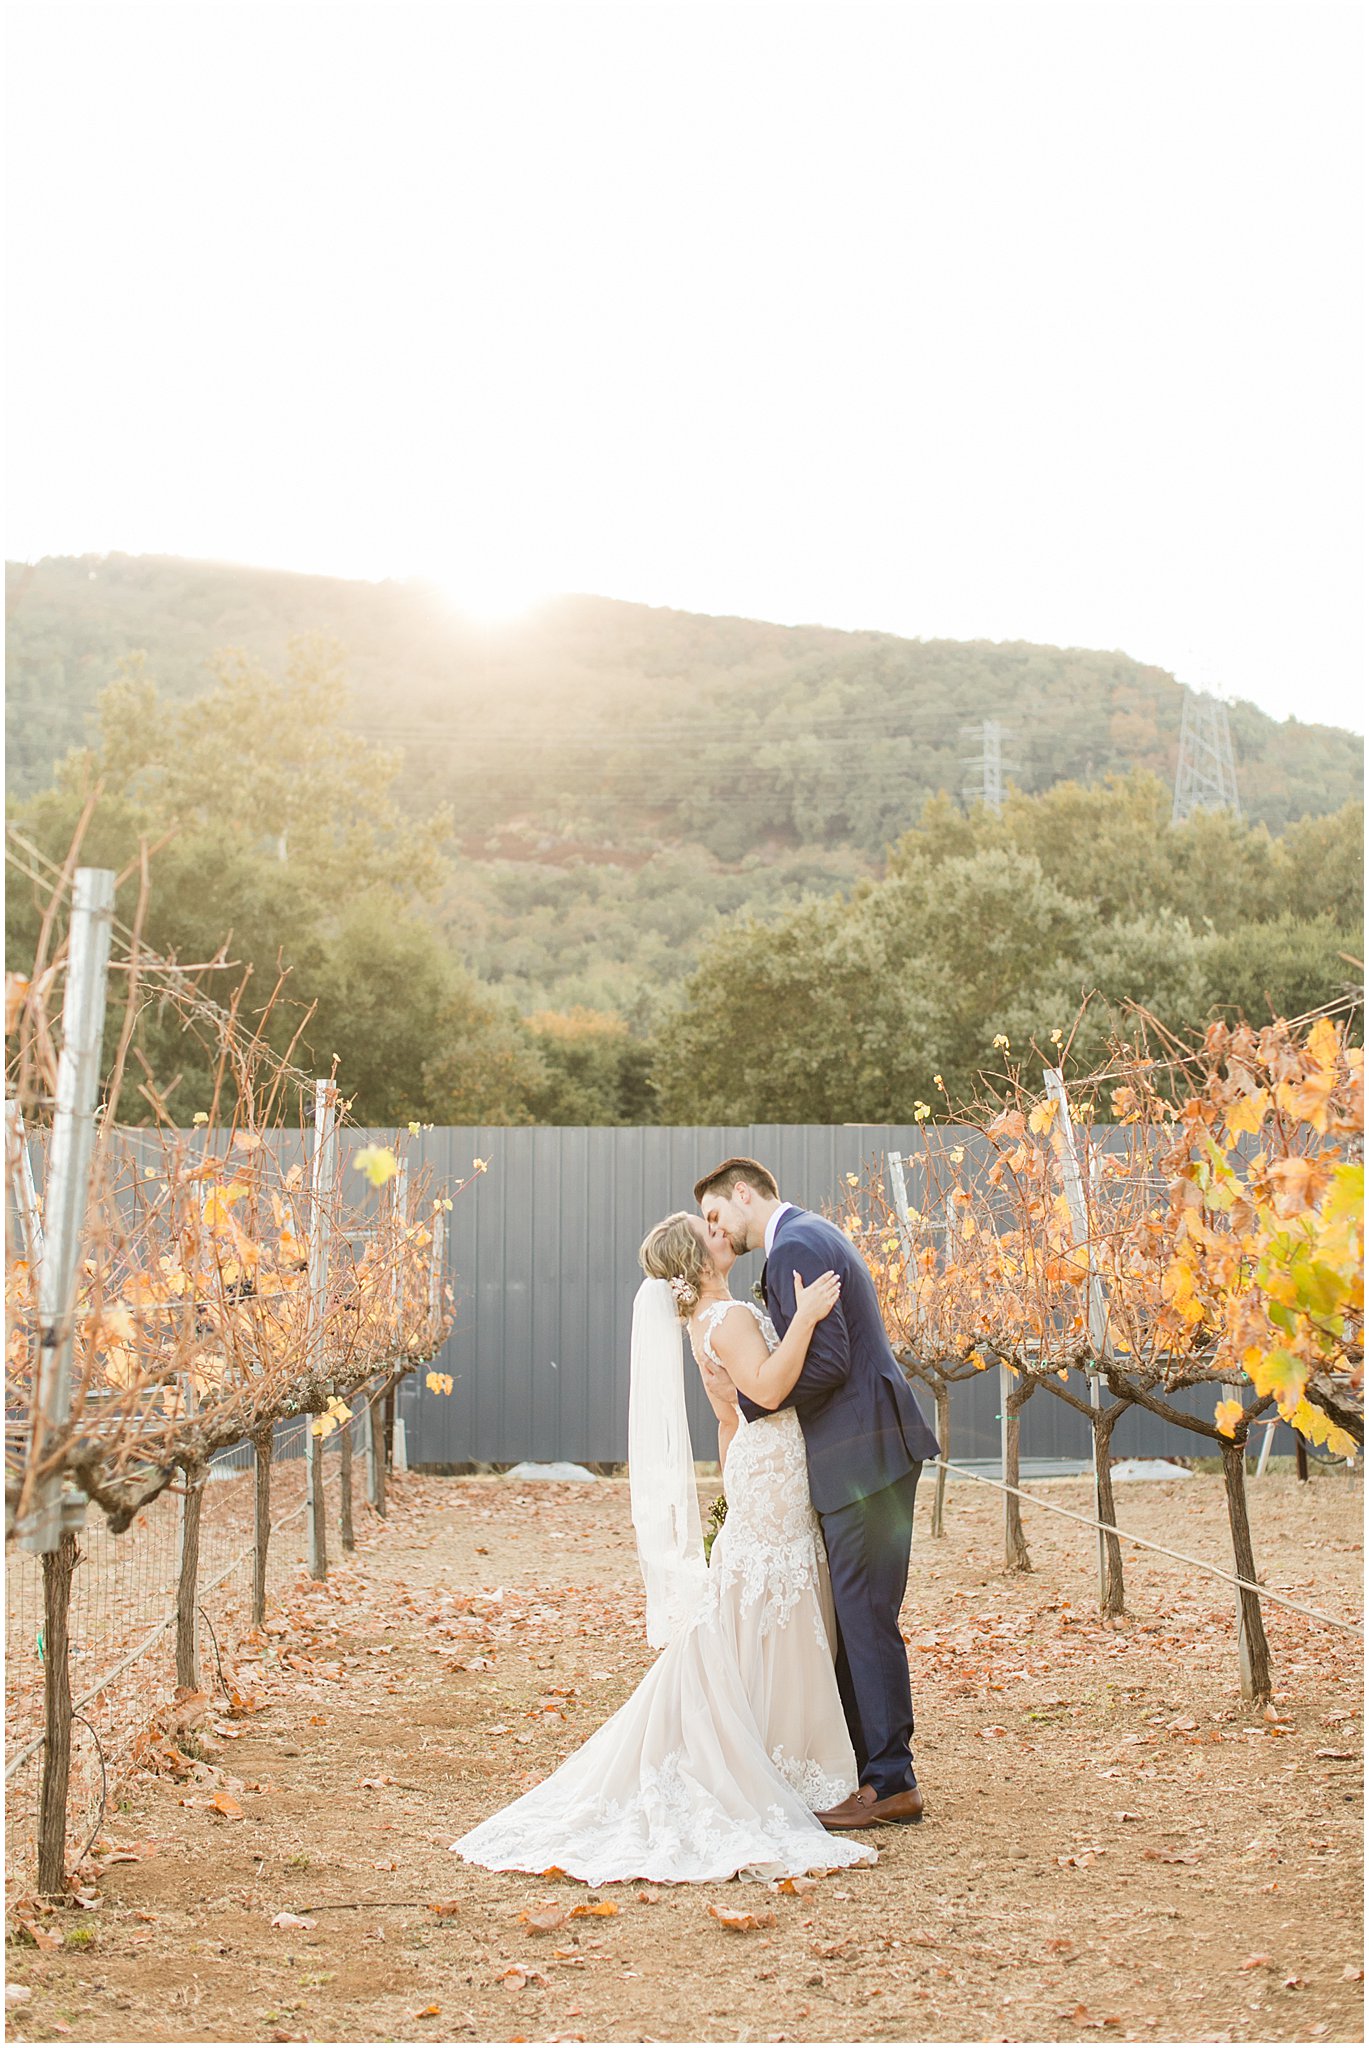 Sycamore Creek Vineyards Wedding - Live Love Leal - Fall Wedding - Bay Area Wedding Photographer - Angela Sue Photography_0099.jpg